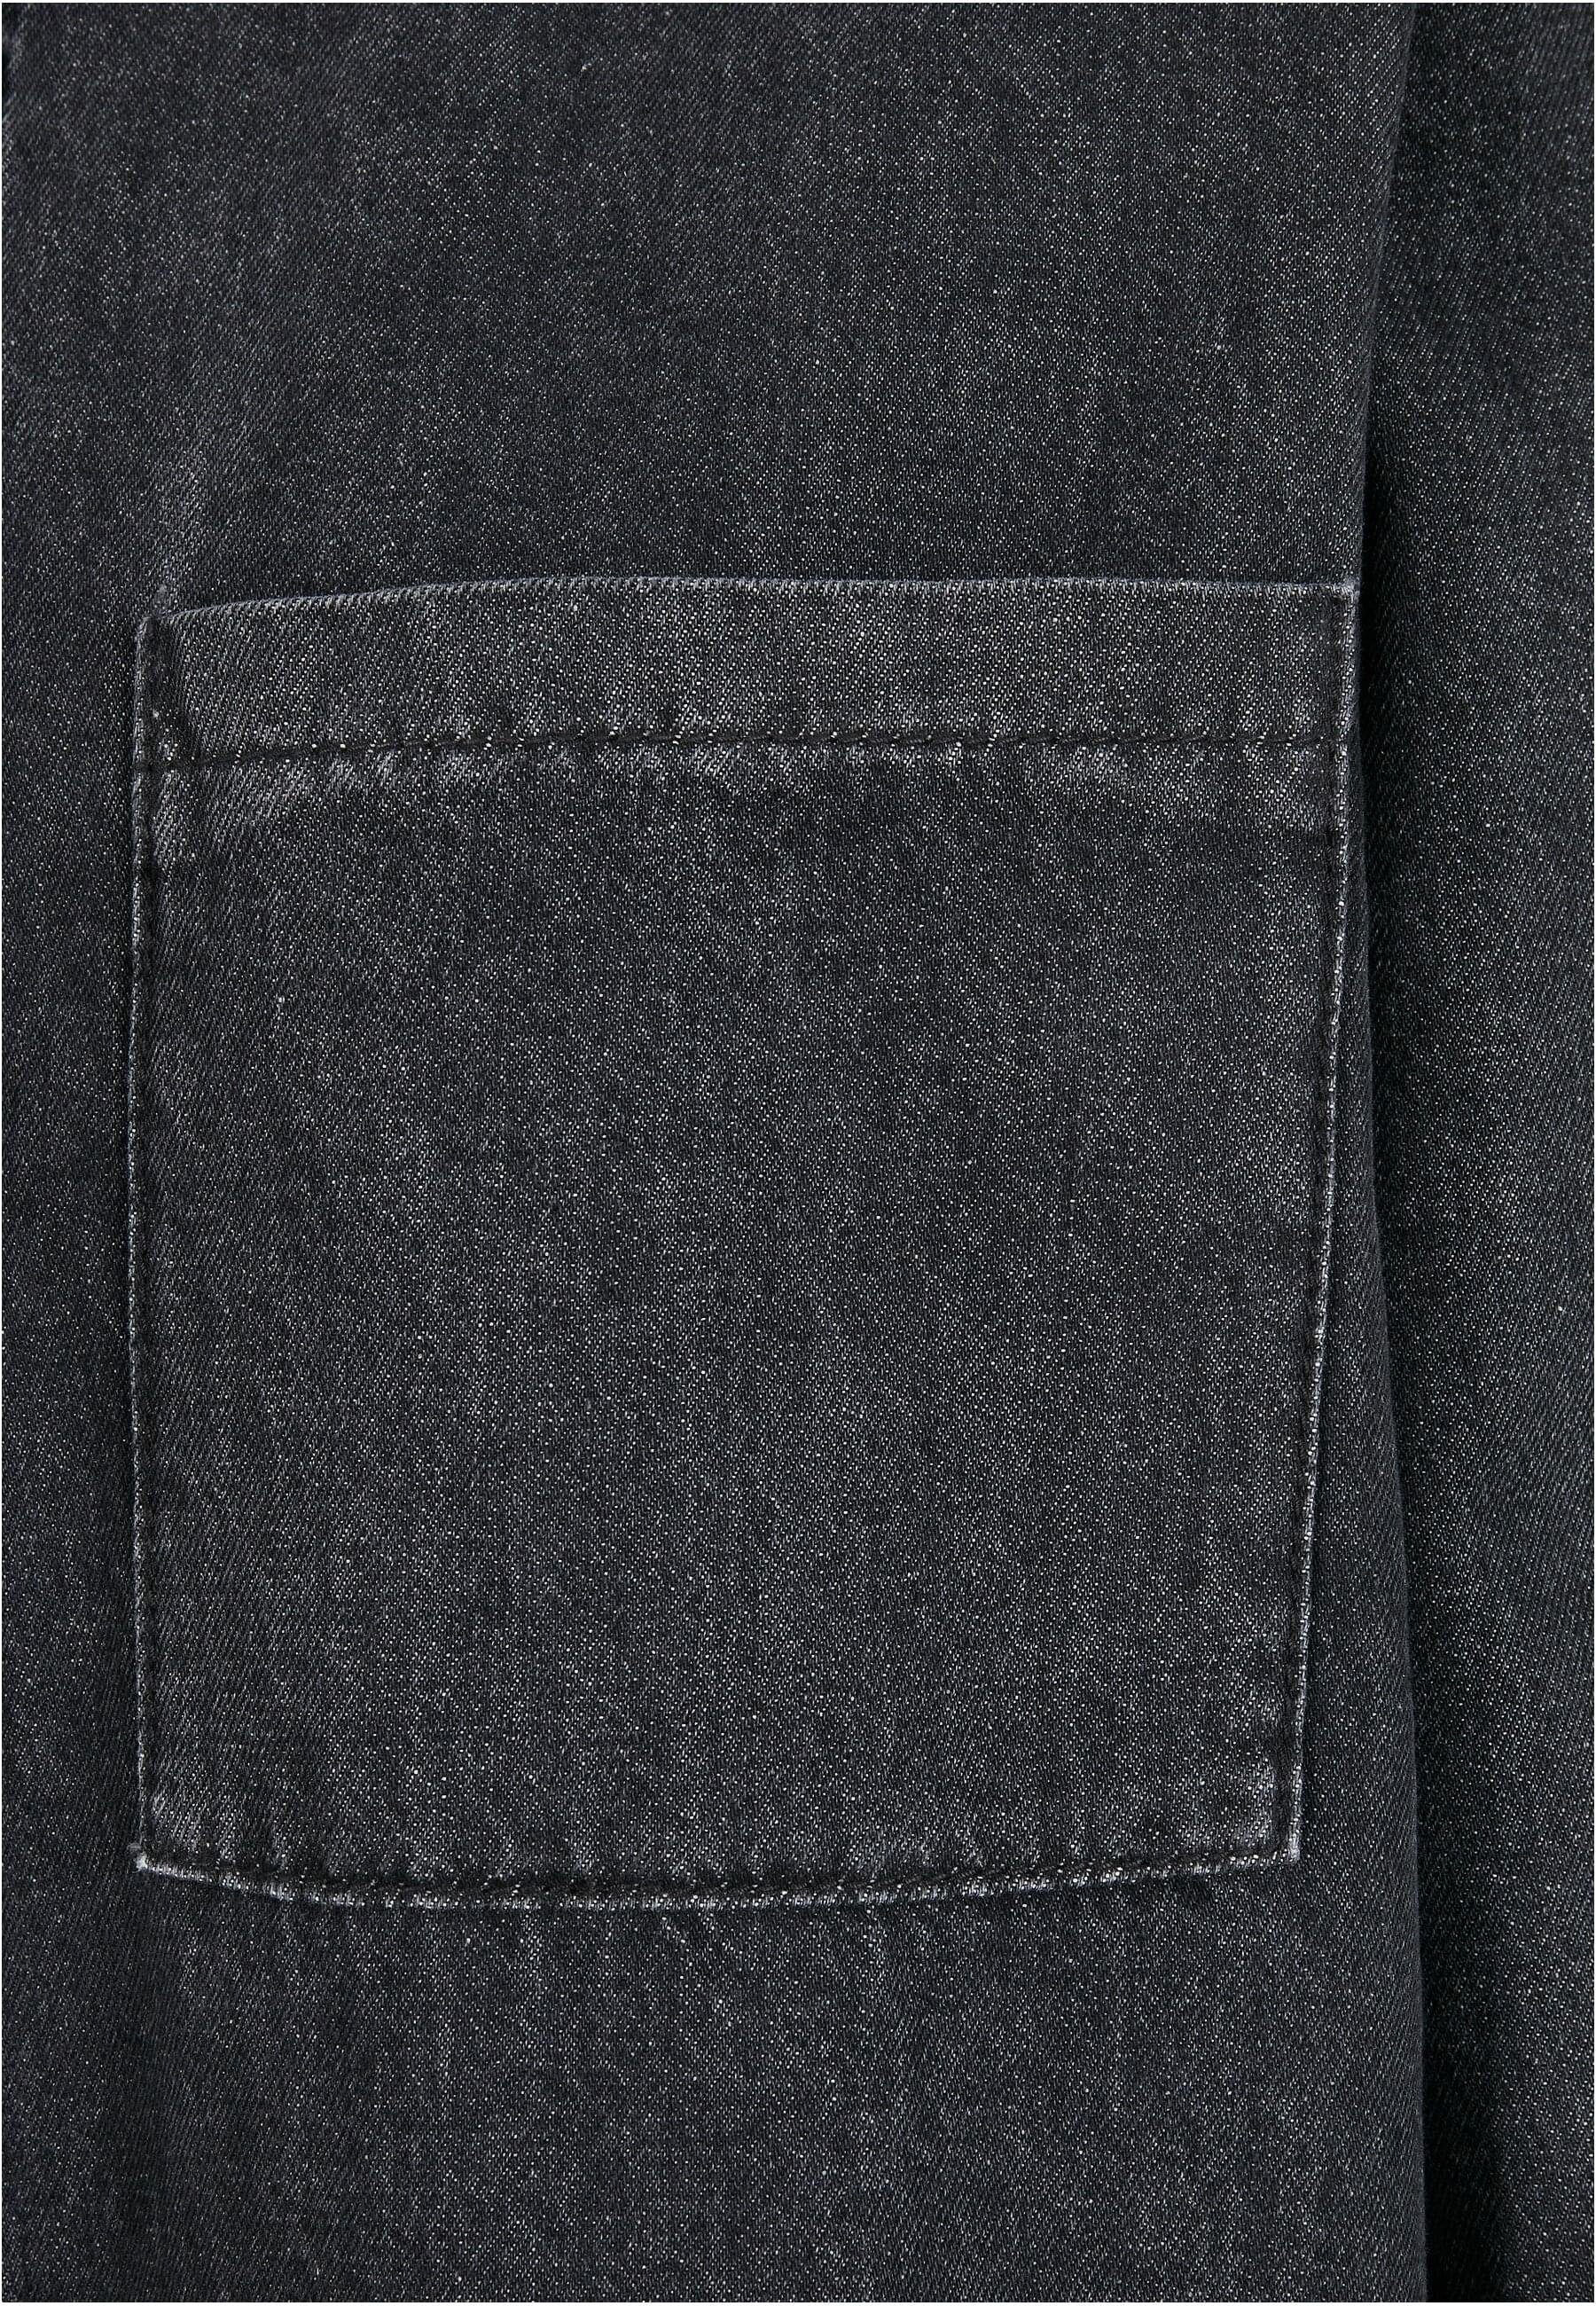 washed Bluse URBAN Ladies CLASSICS black Oversized Damen Denim stone Shirt Klassische